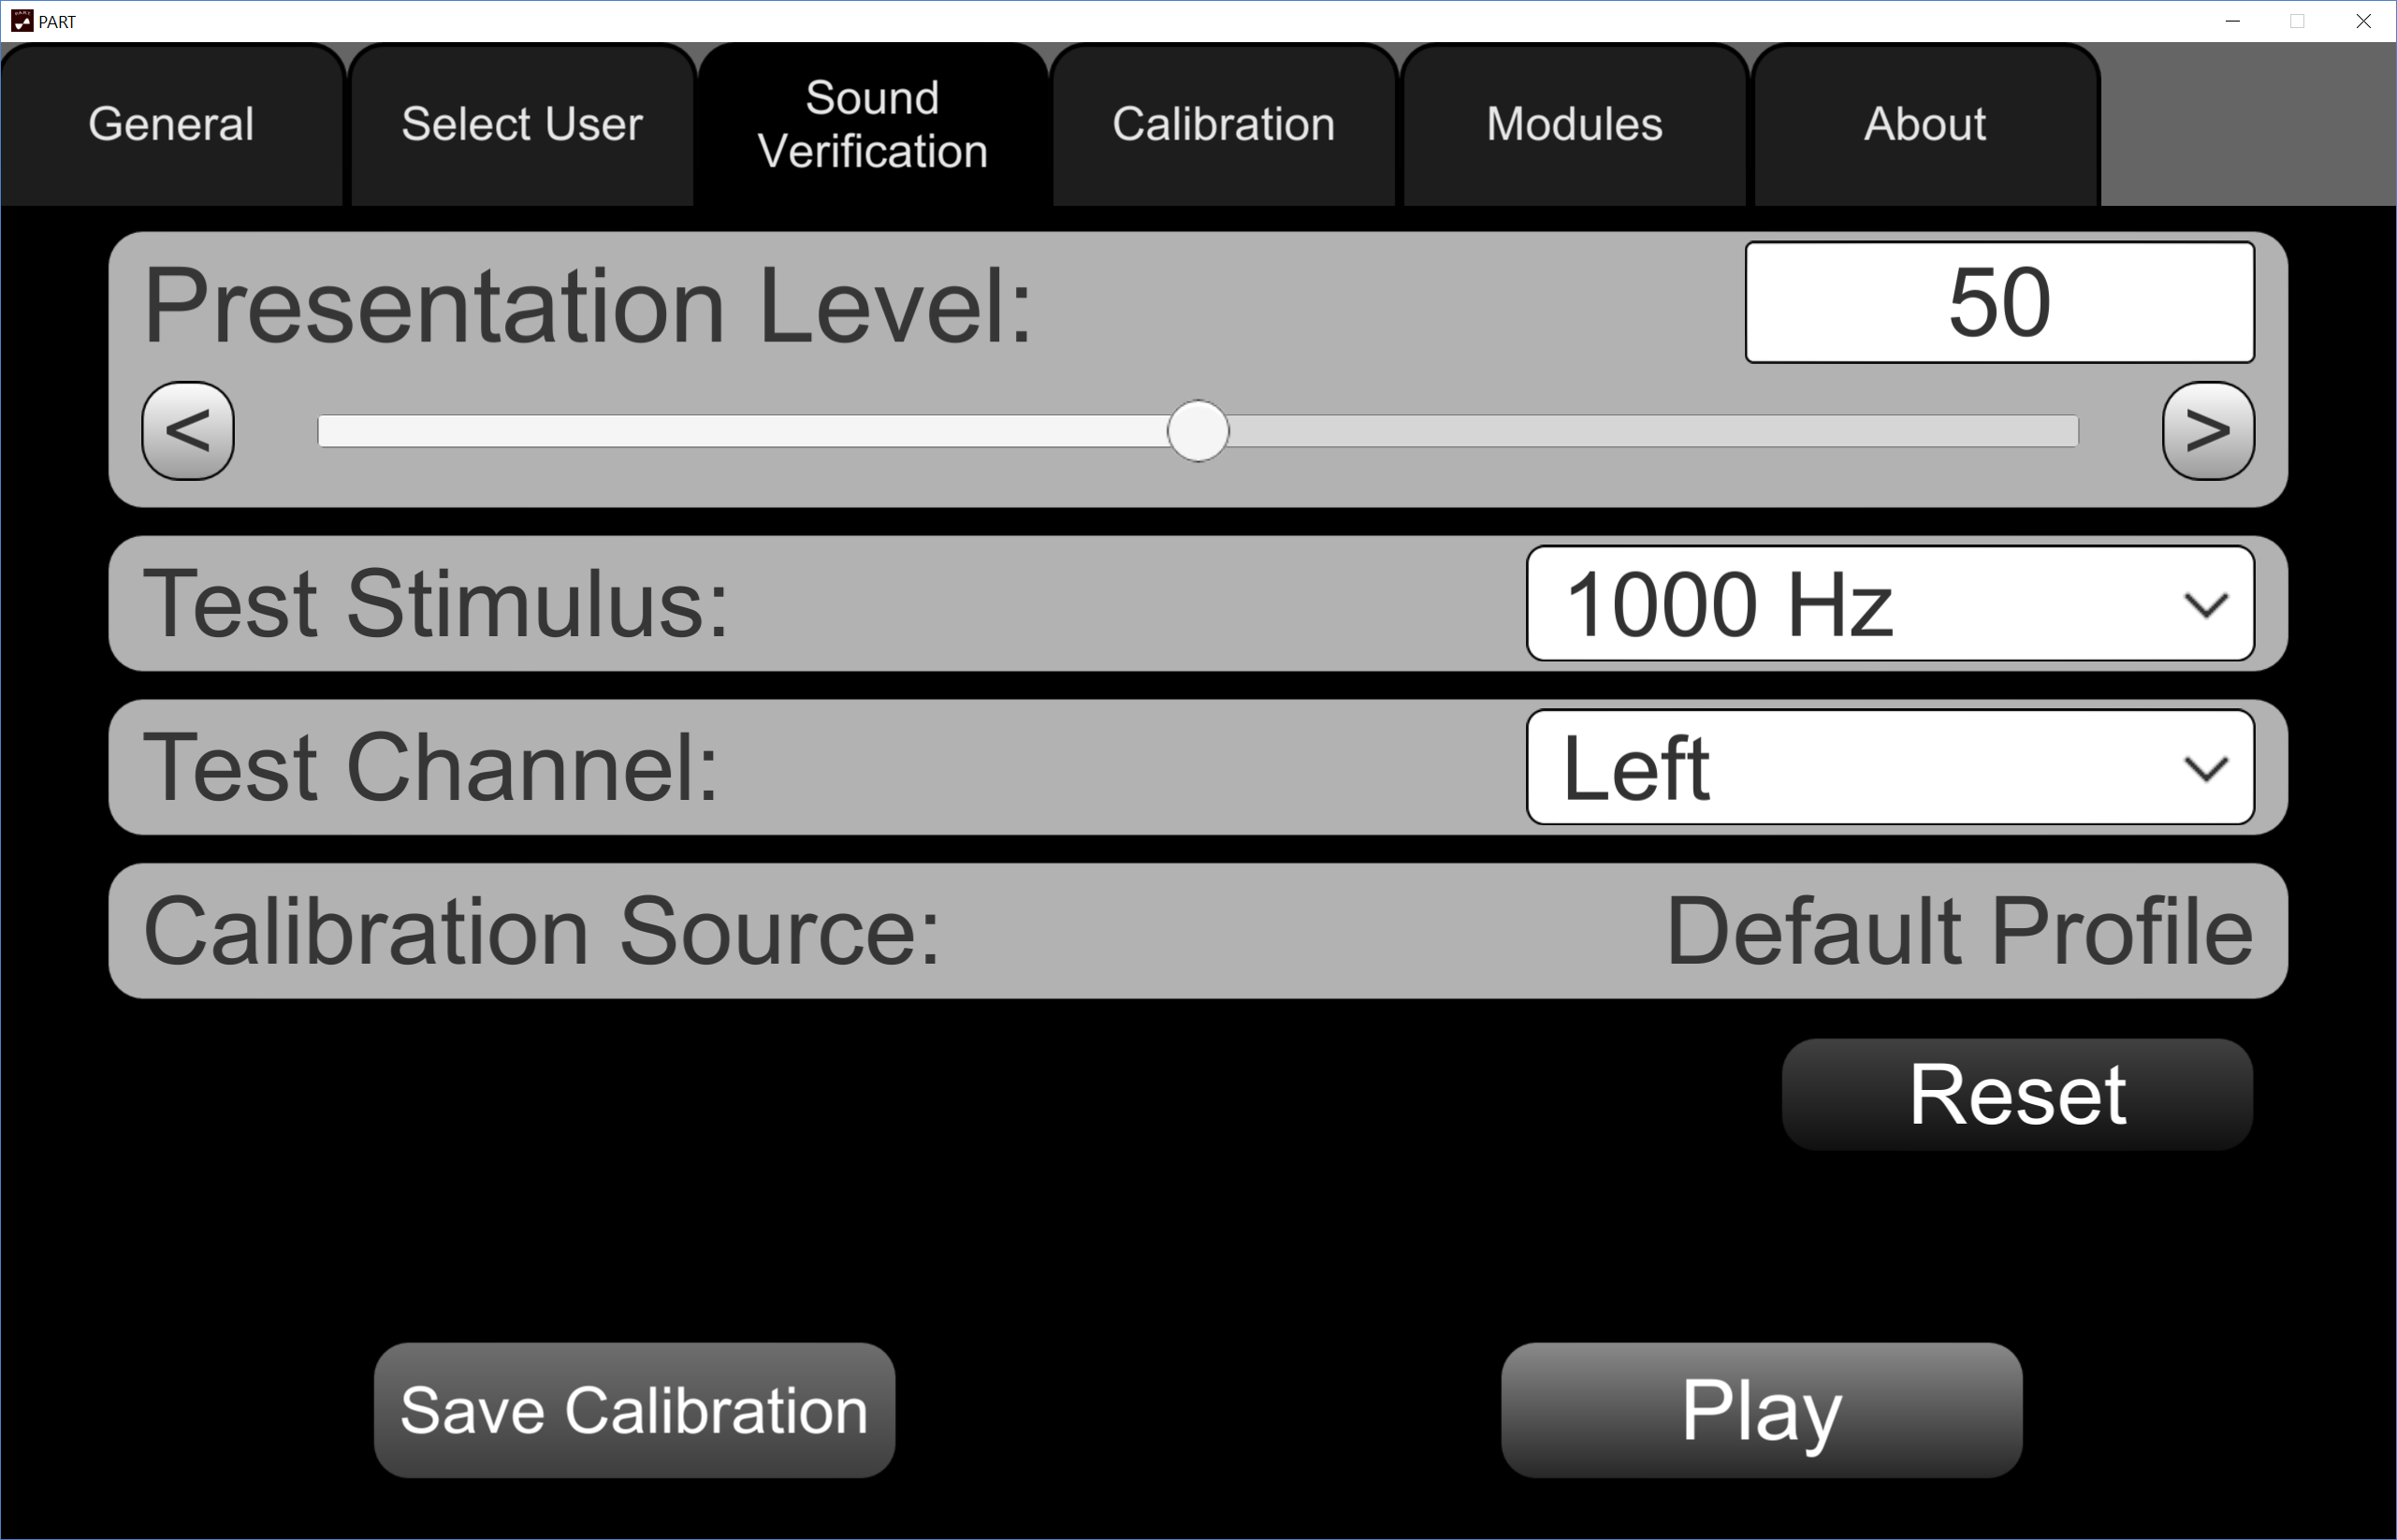 Figure 2. PART Sound Verification Screen